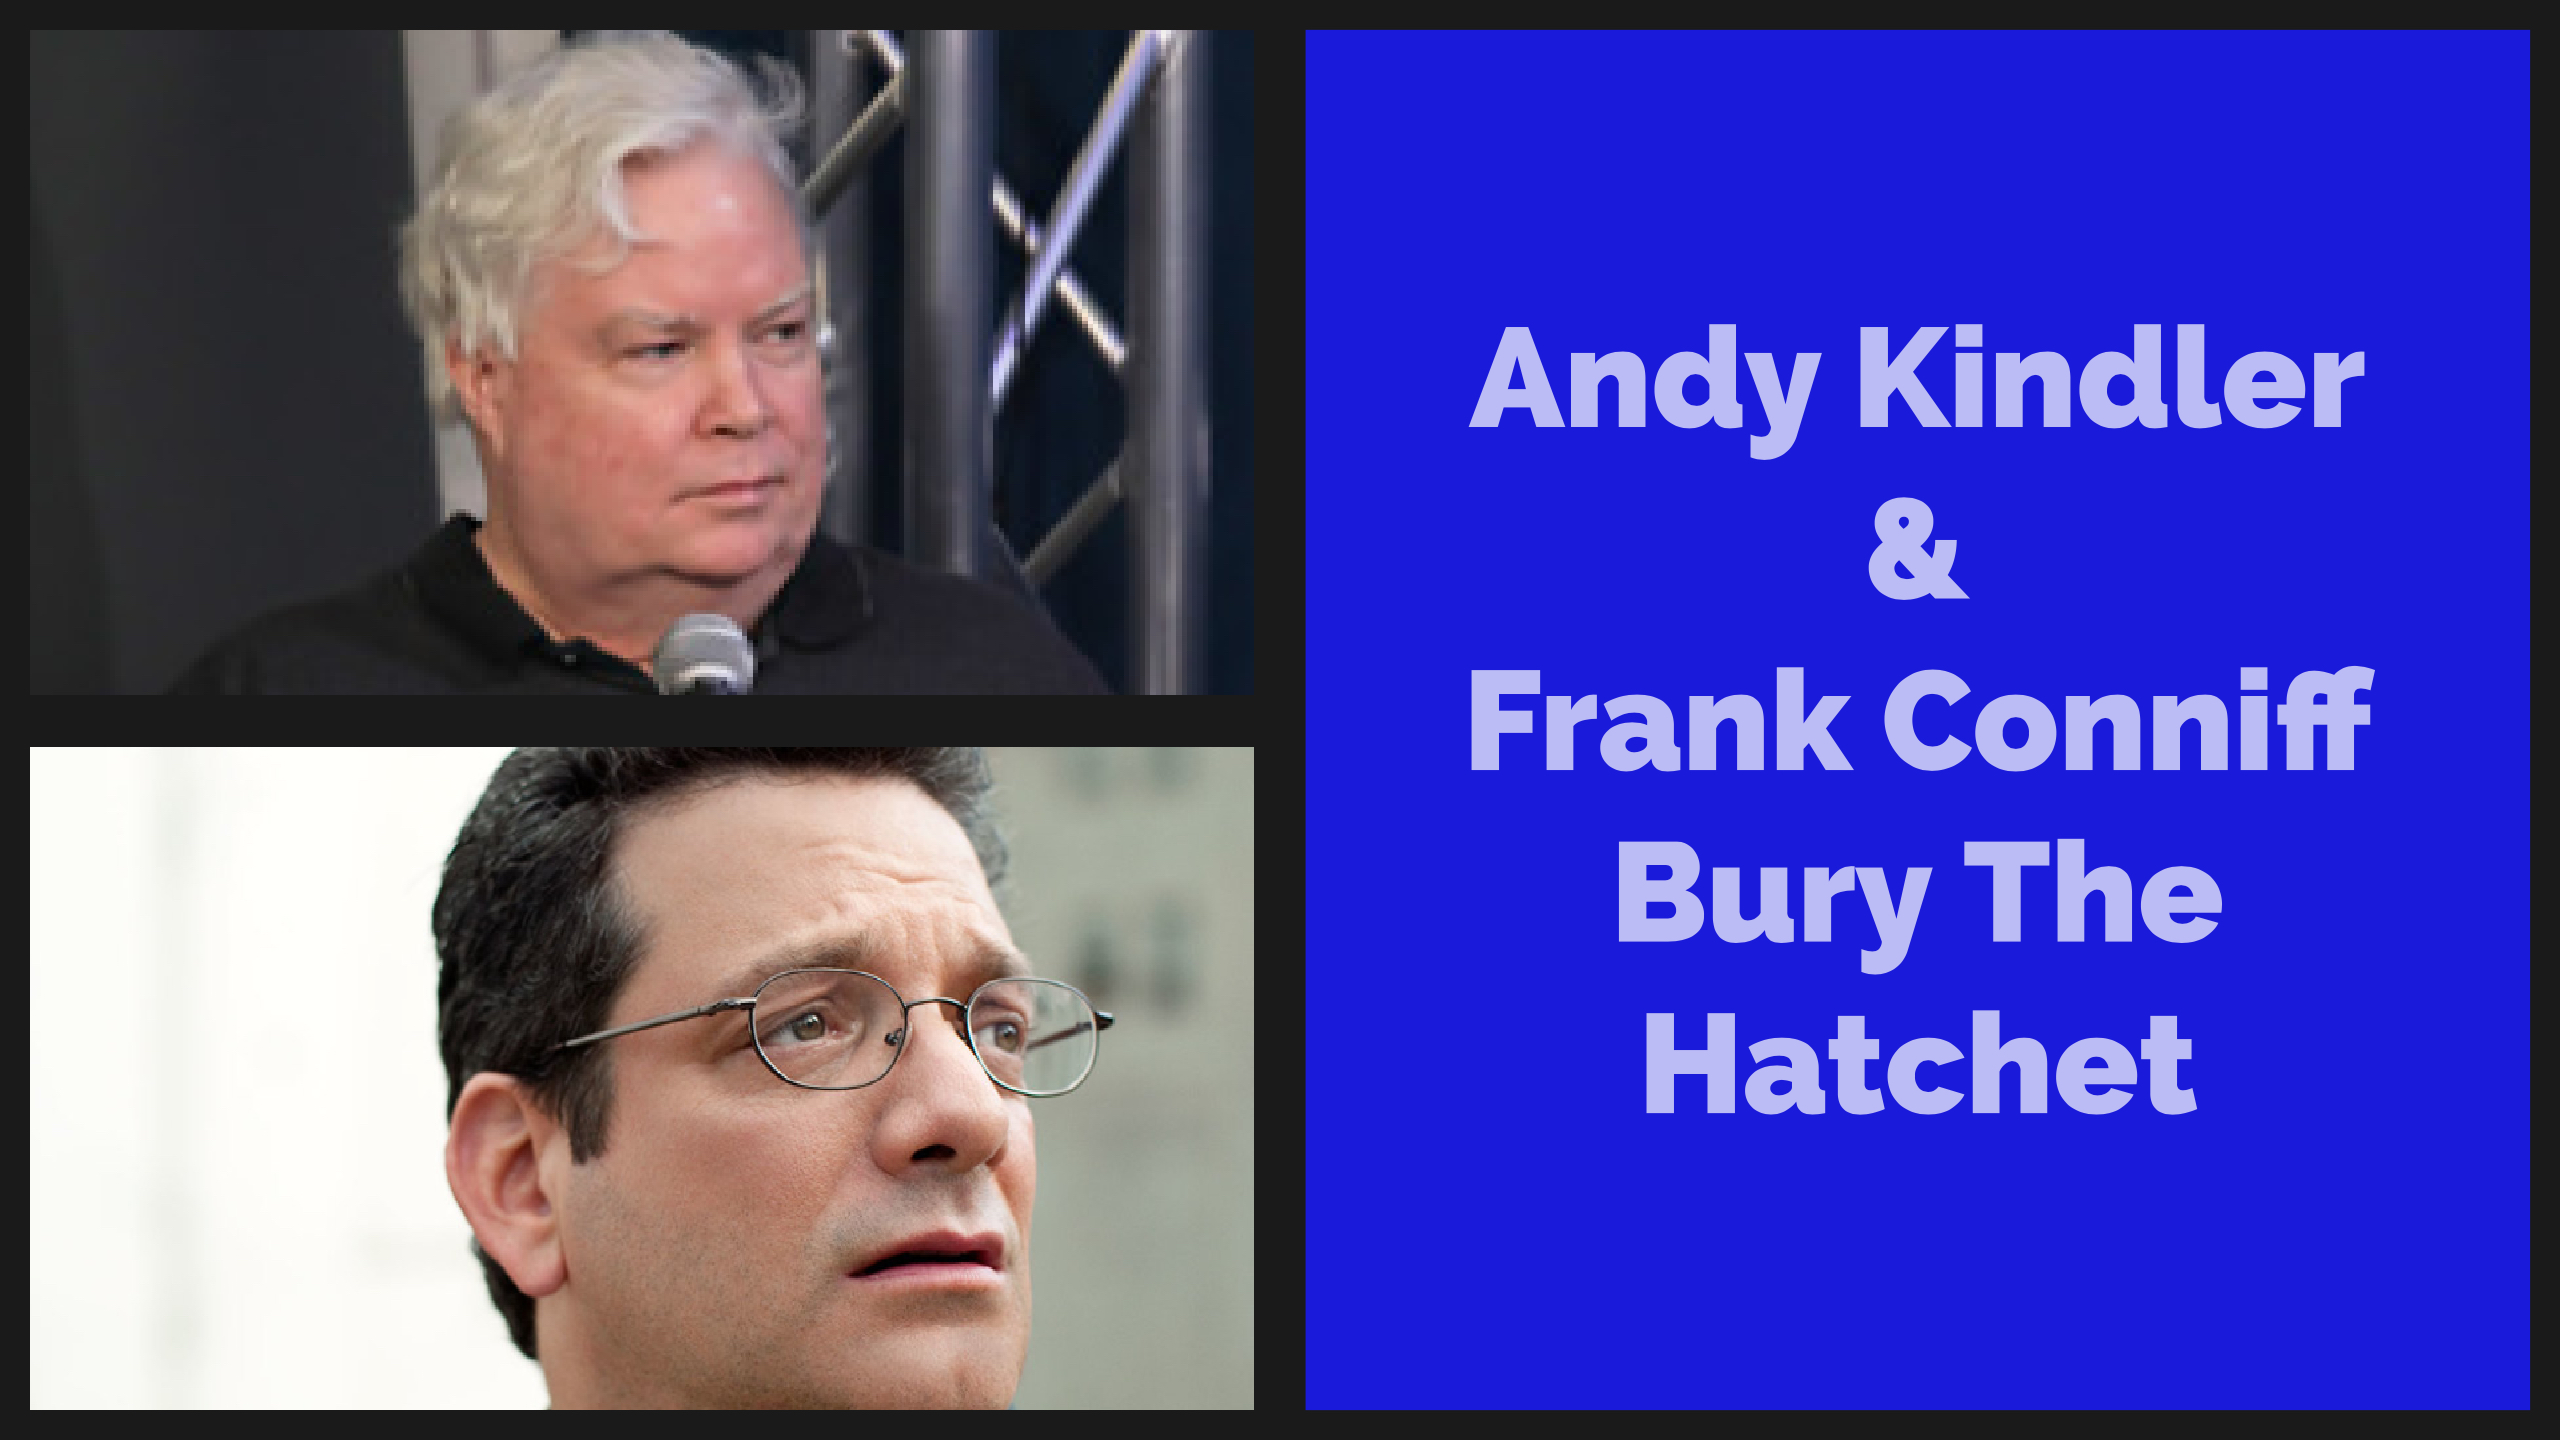 Andy Kindler & Frank Conniff on The David Feldman Show